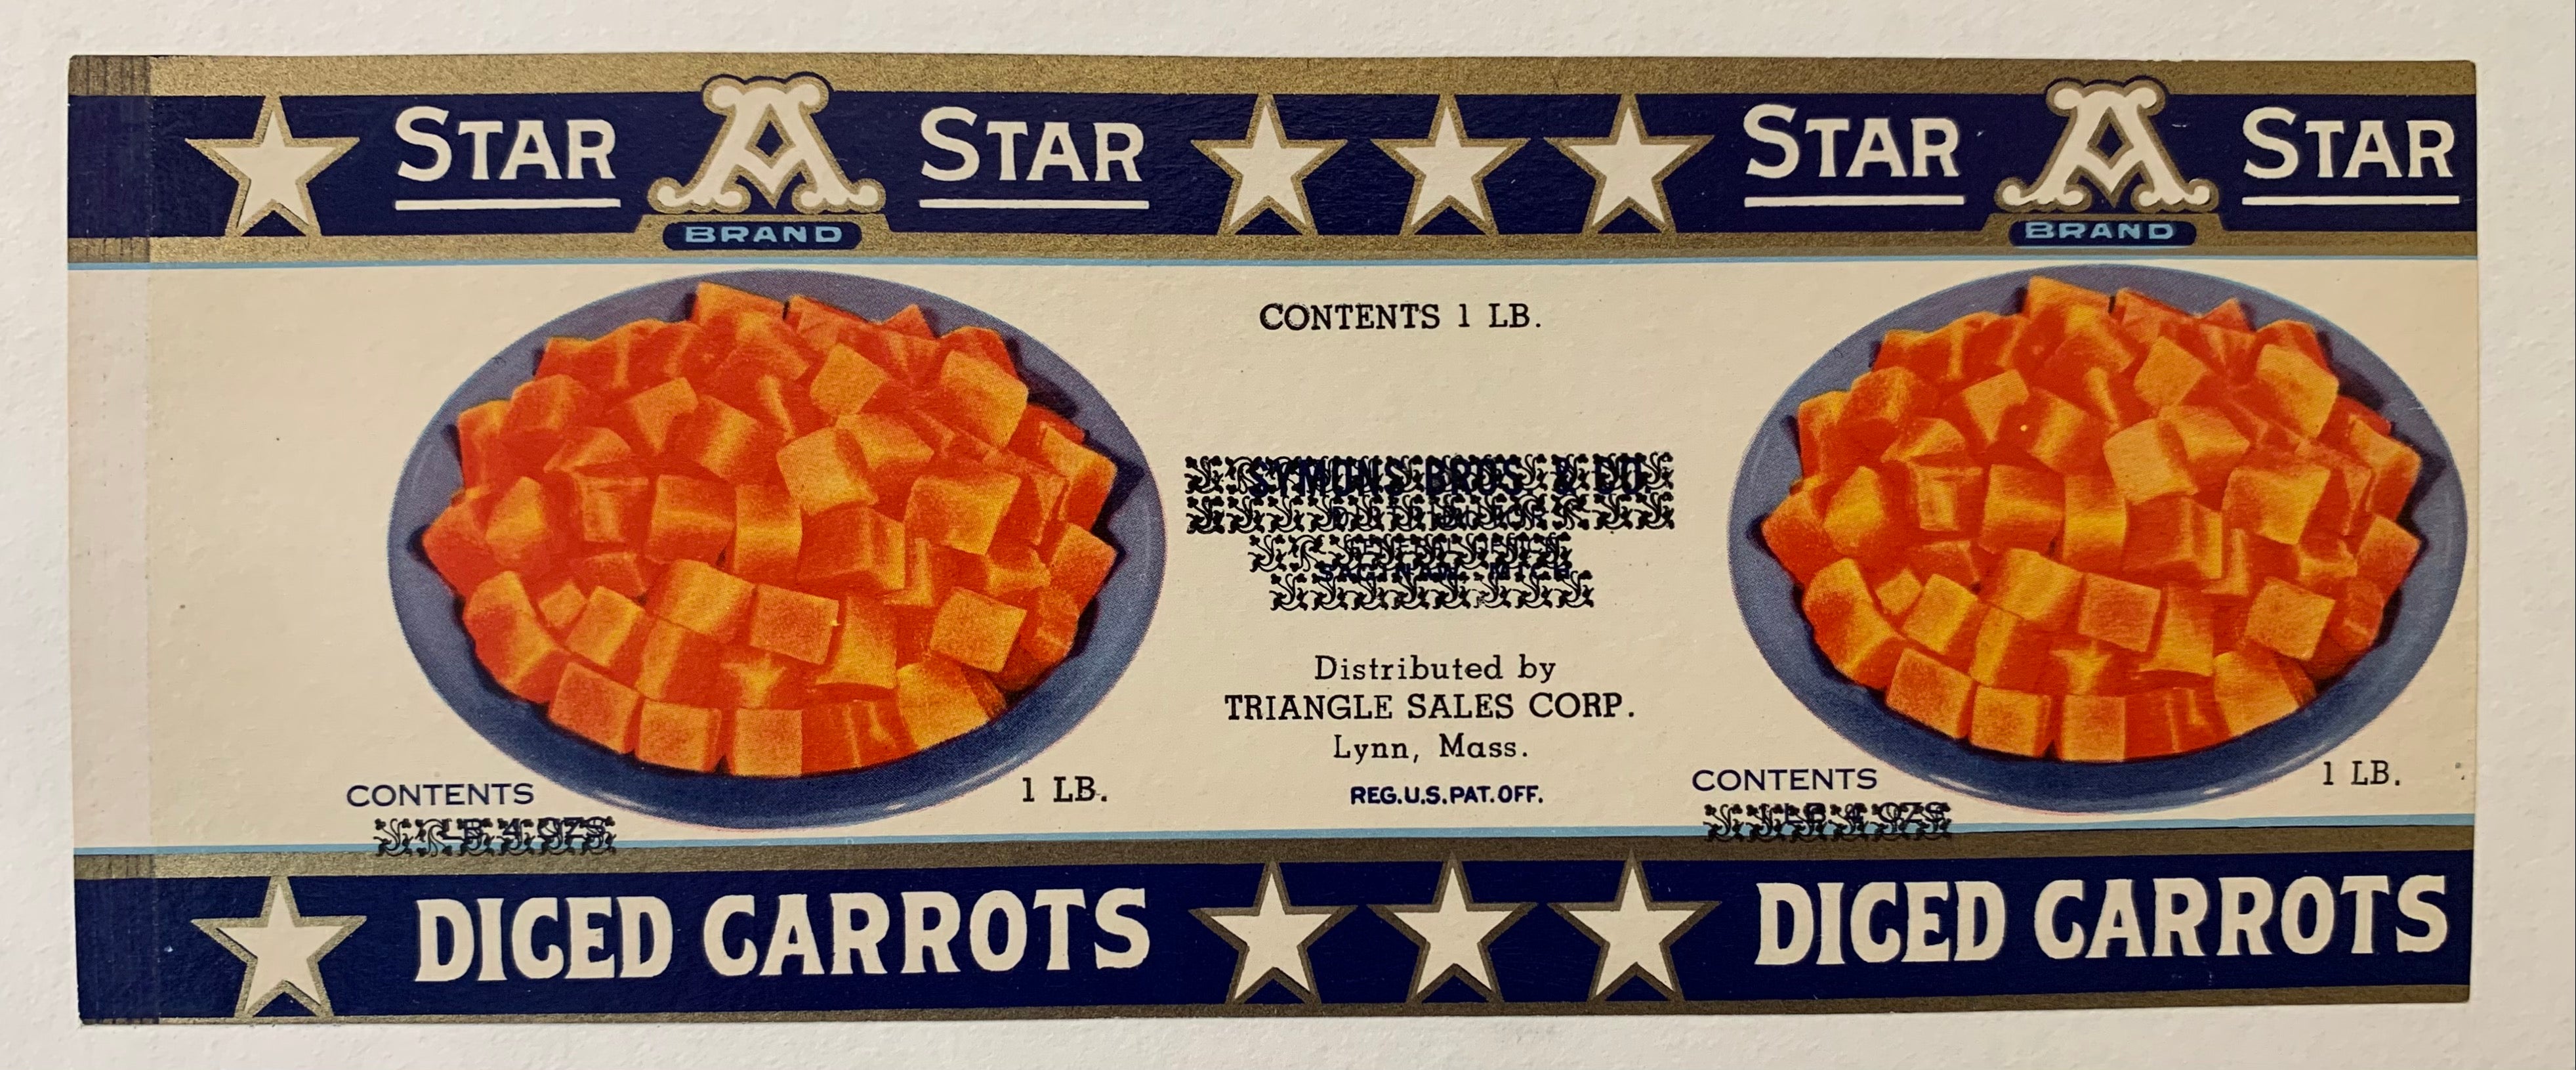 Star Brand Diced Carrot Label